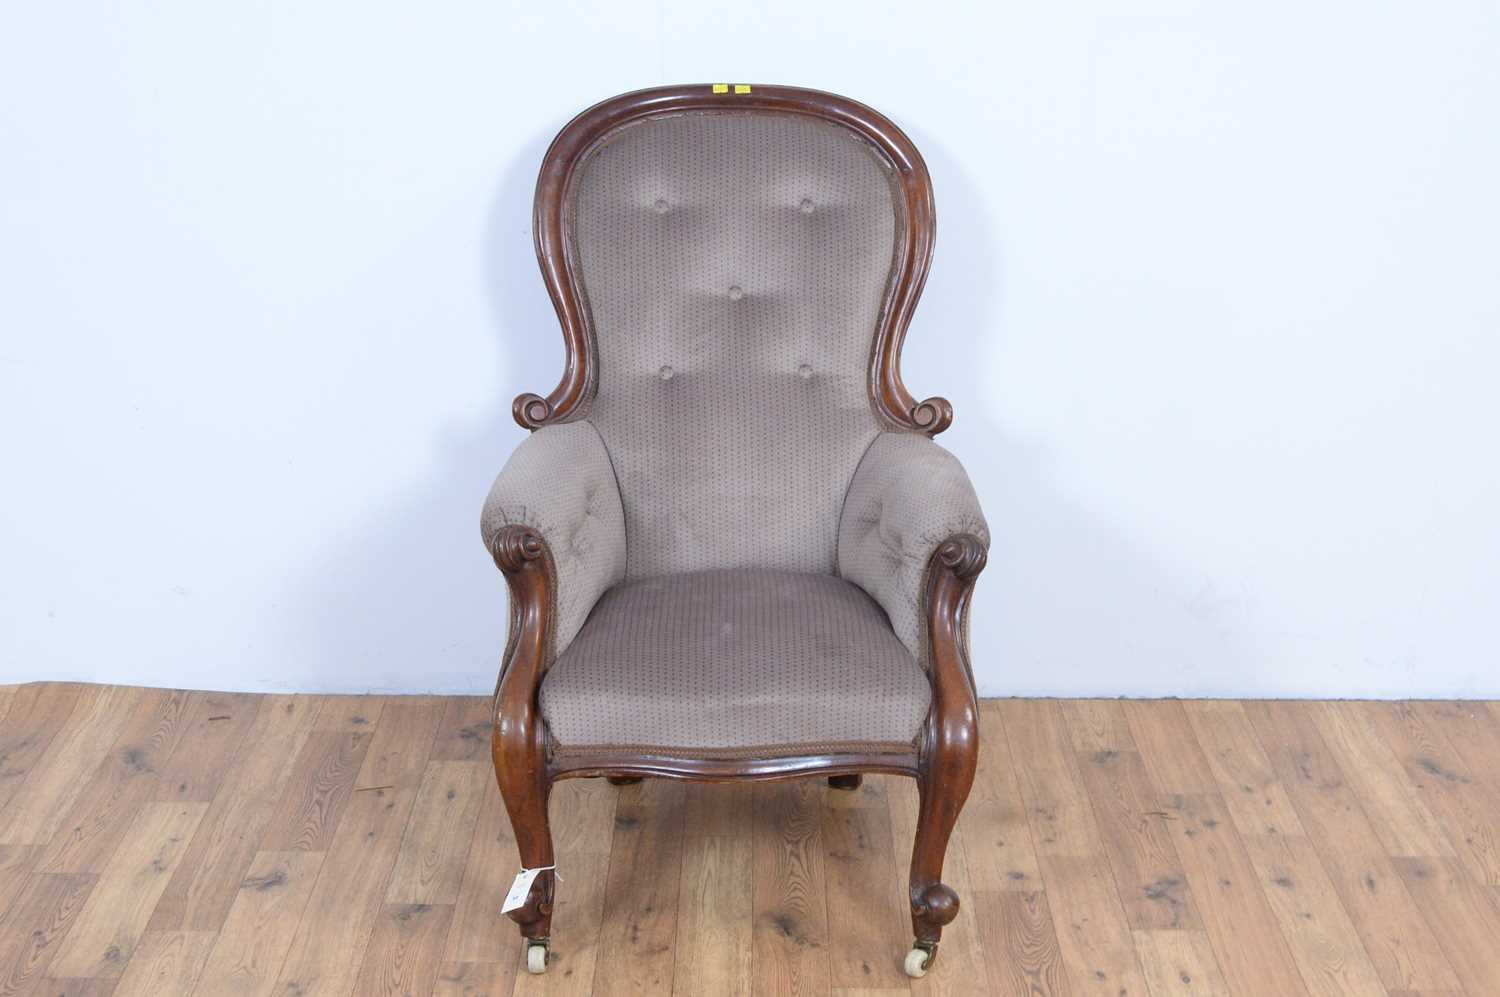 An Edwardian walnut framed spoon back easy chair - Image 2 of 4